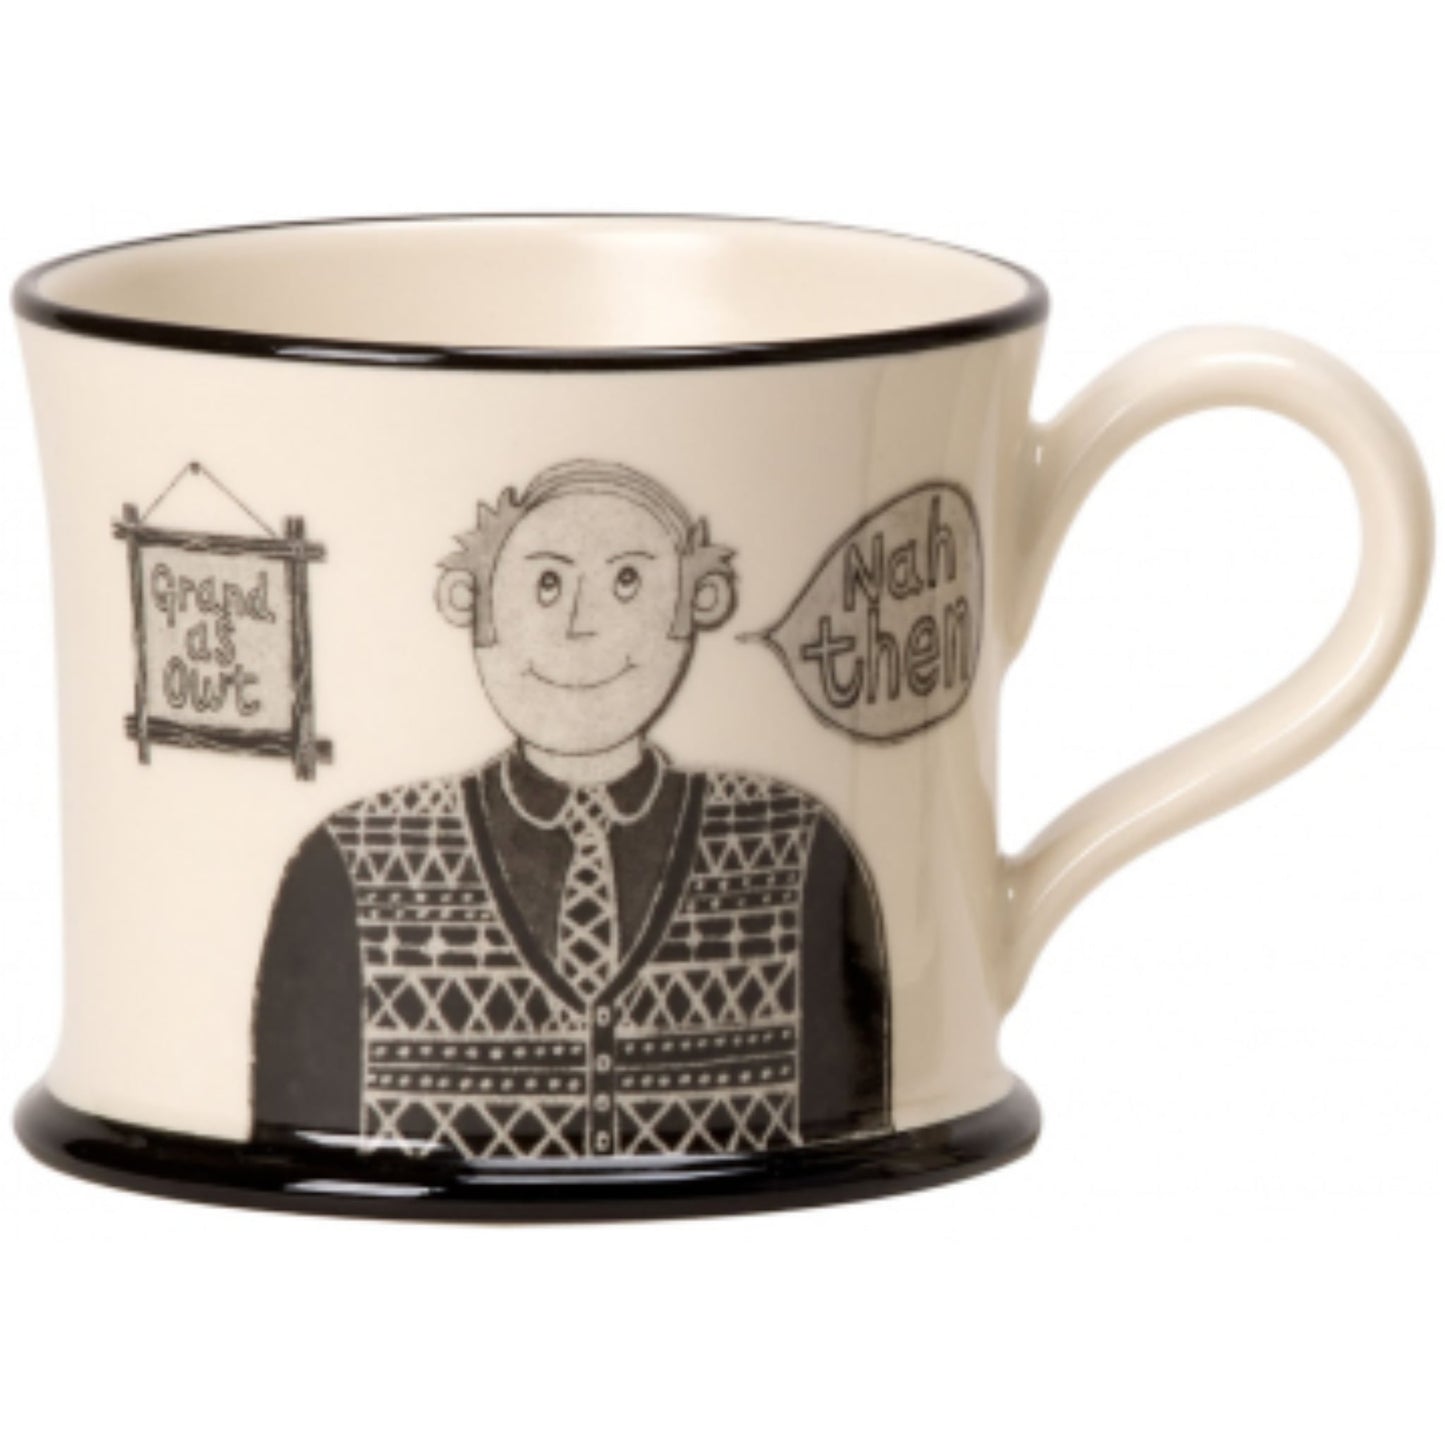 T'Best Grandad in T'World Mug - The Great Yorkshire Shop